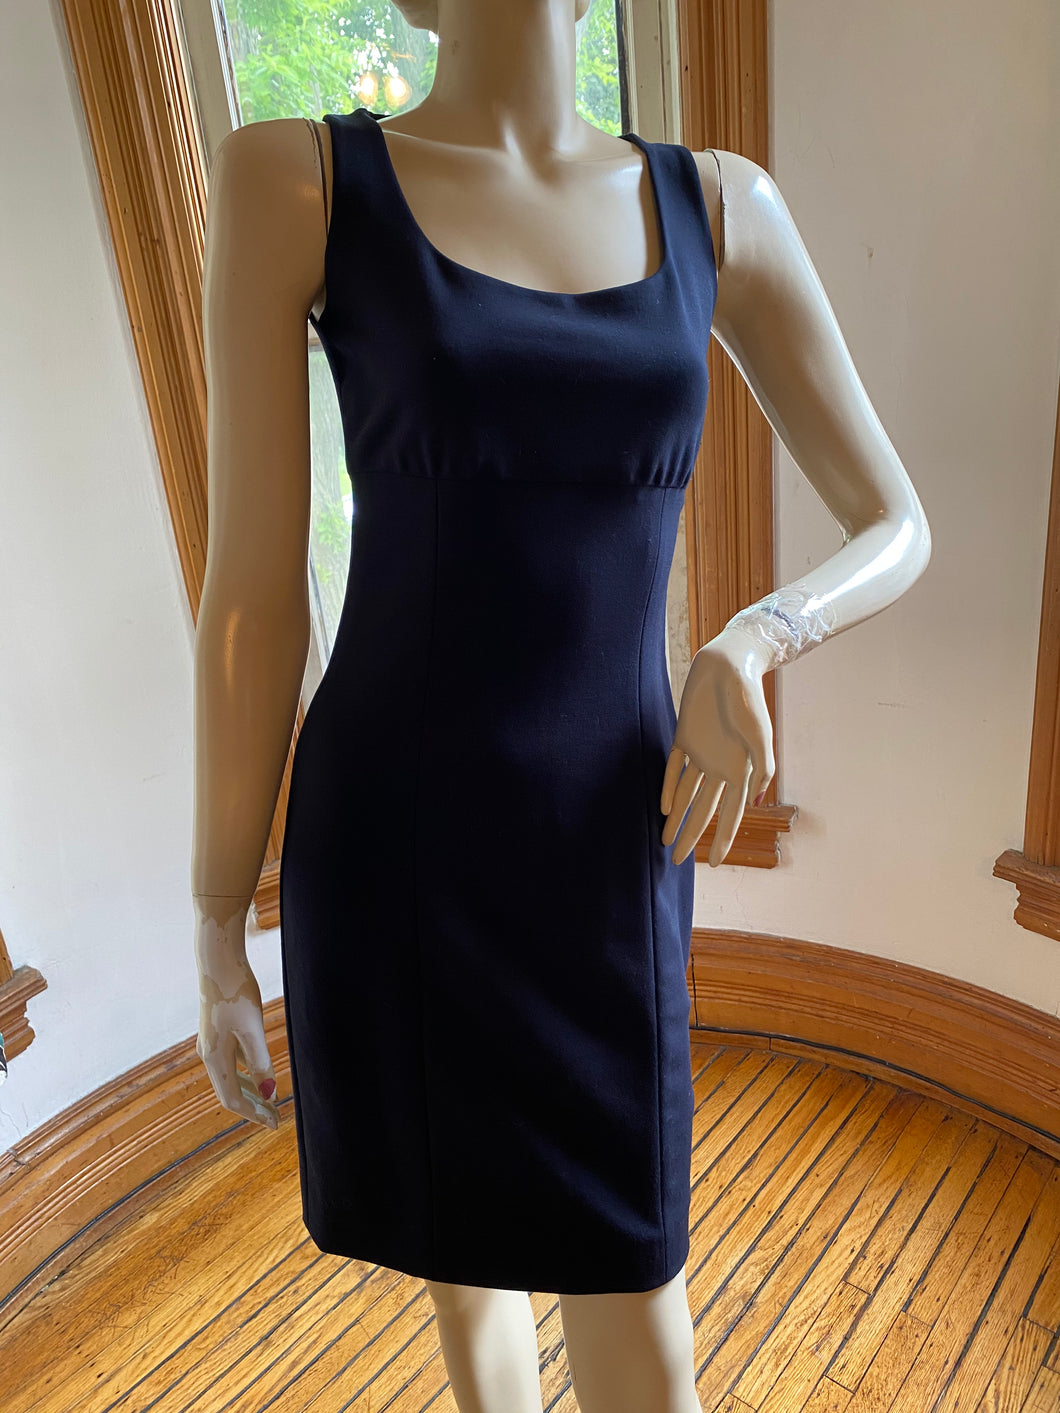 Ralph Lauren Black Label Sleeveless Dark Navy Blue Wool Fitted Dress, size XS (US 2)